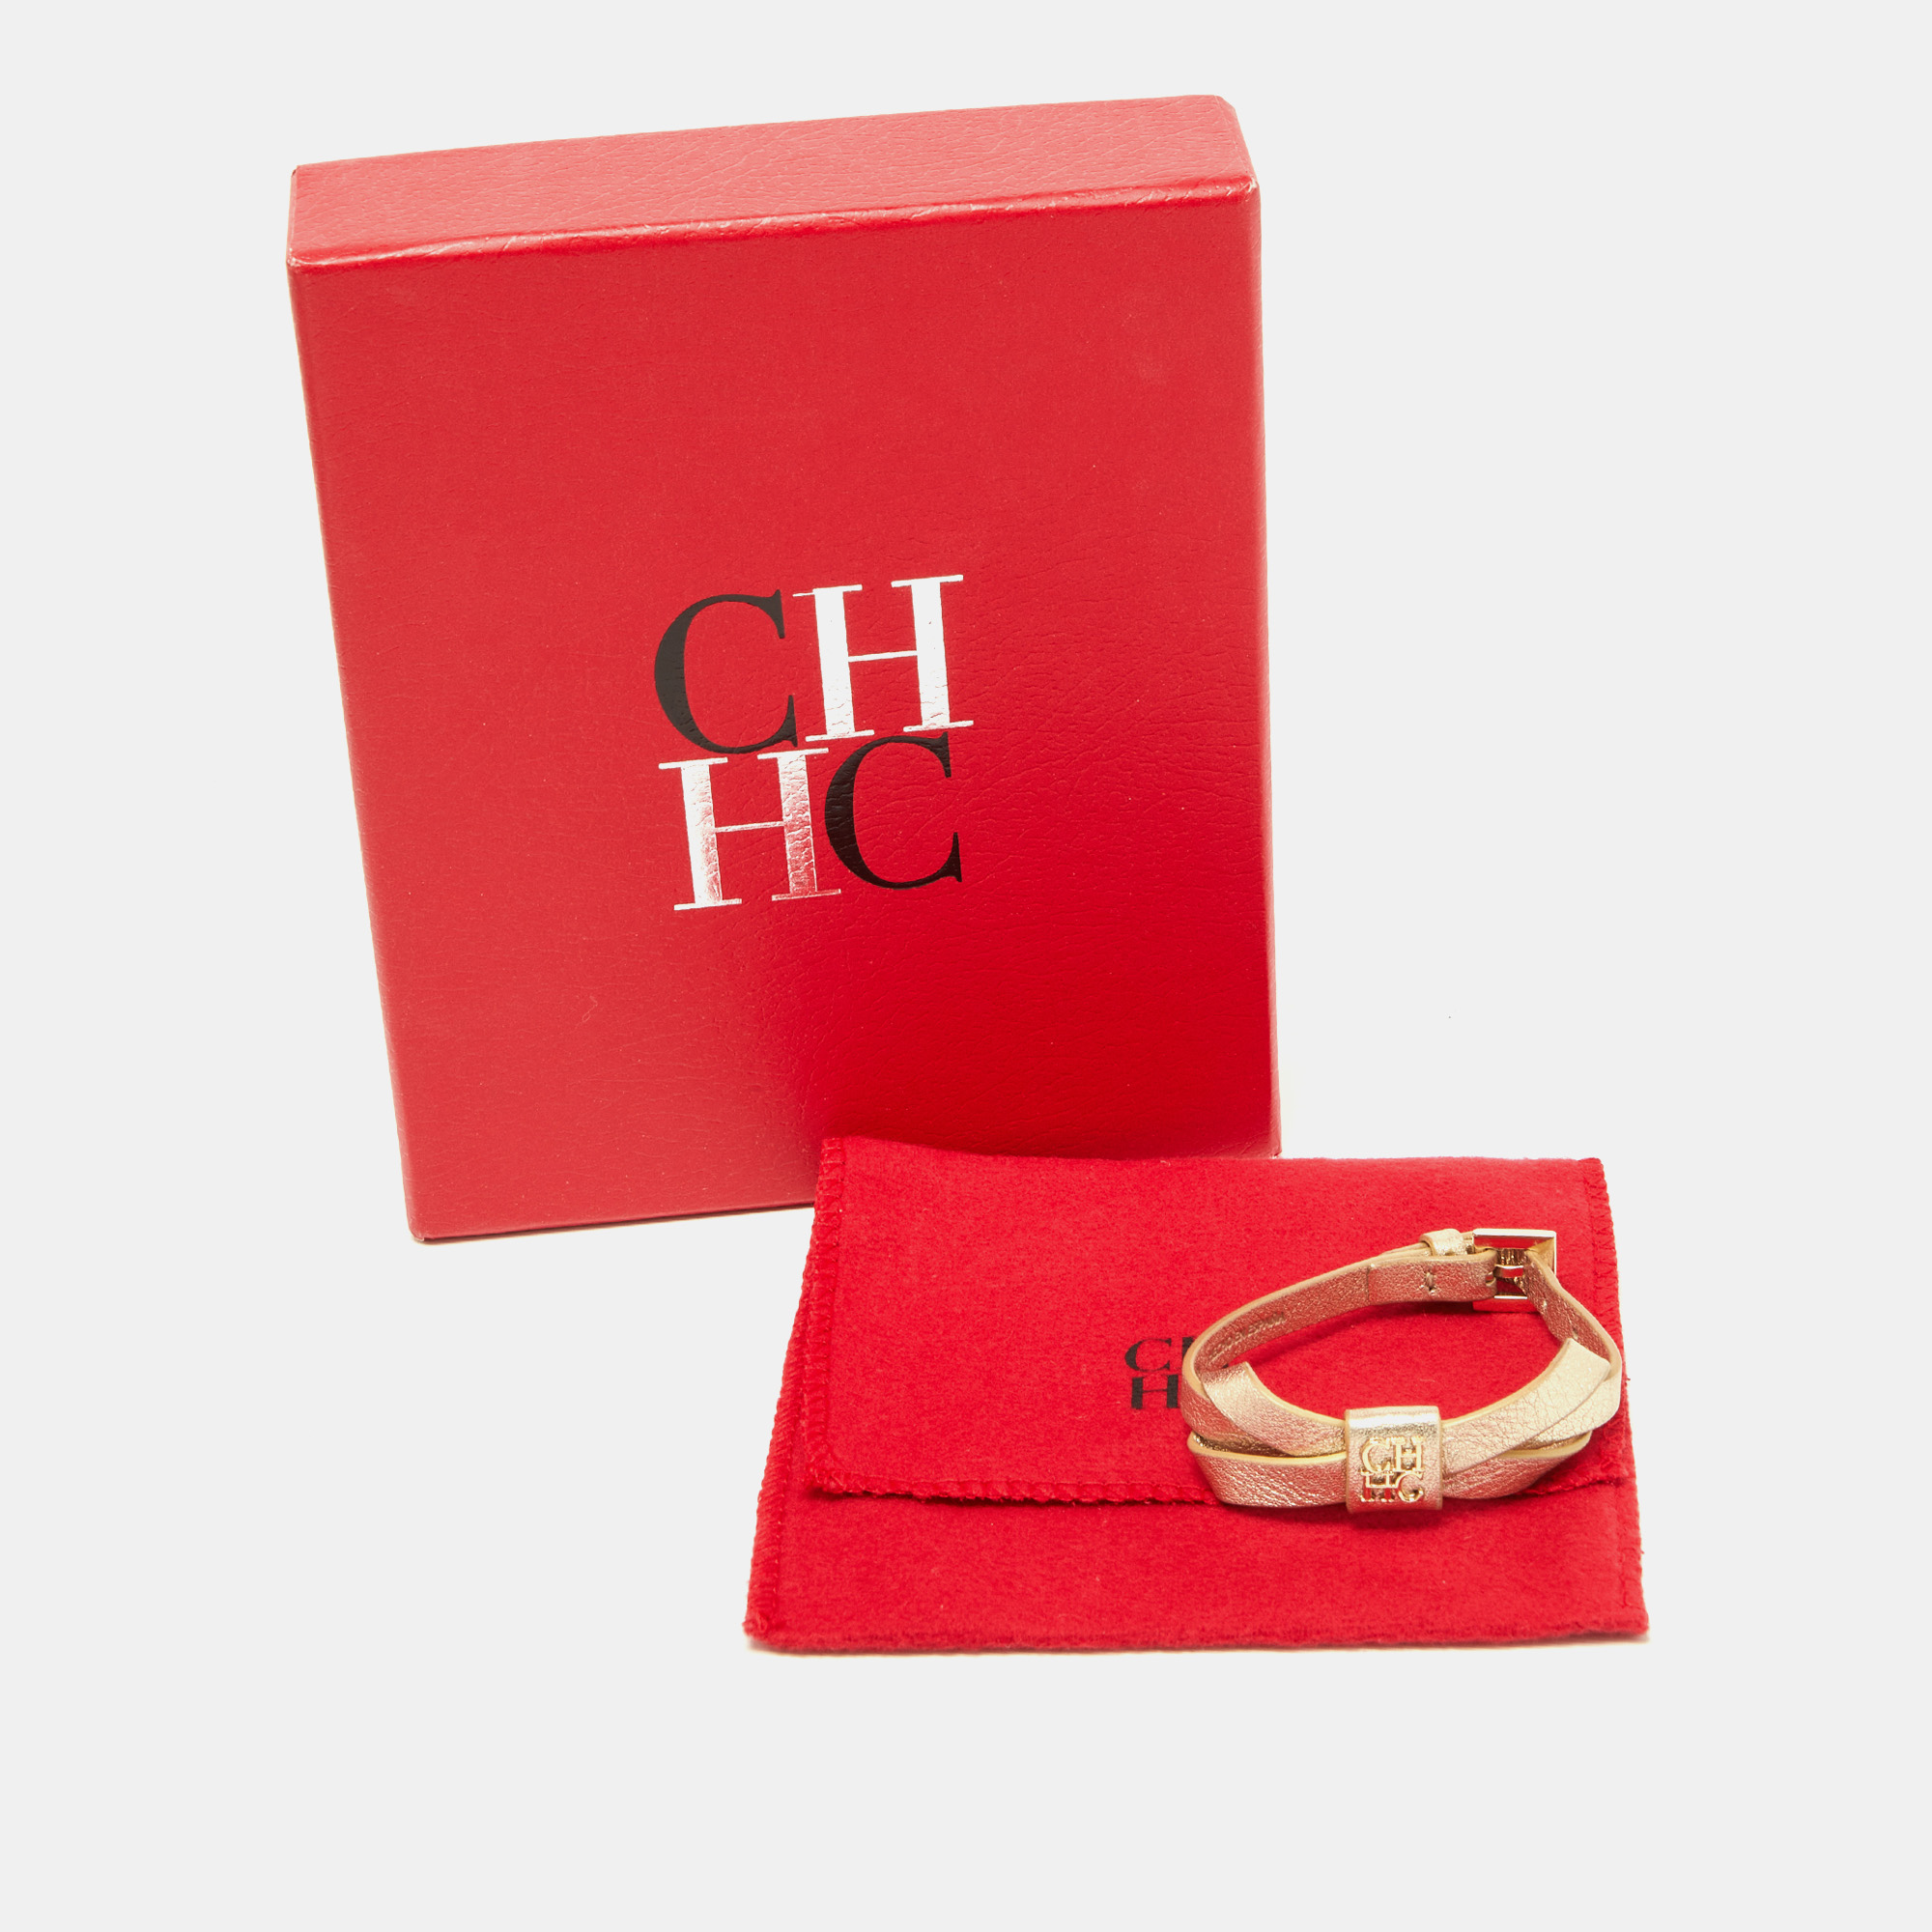 CH Carolina Herrera Gold Leather Logo Bow Bracelet